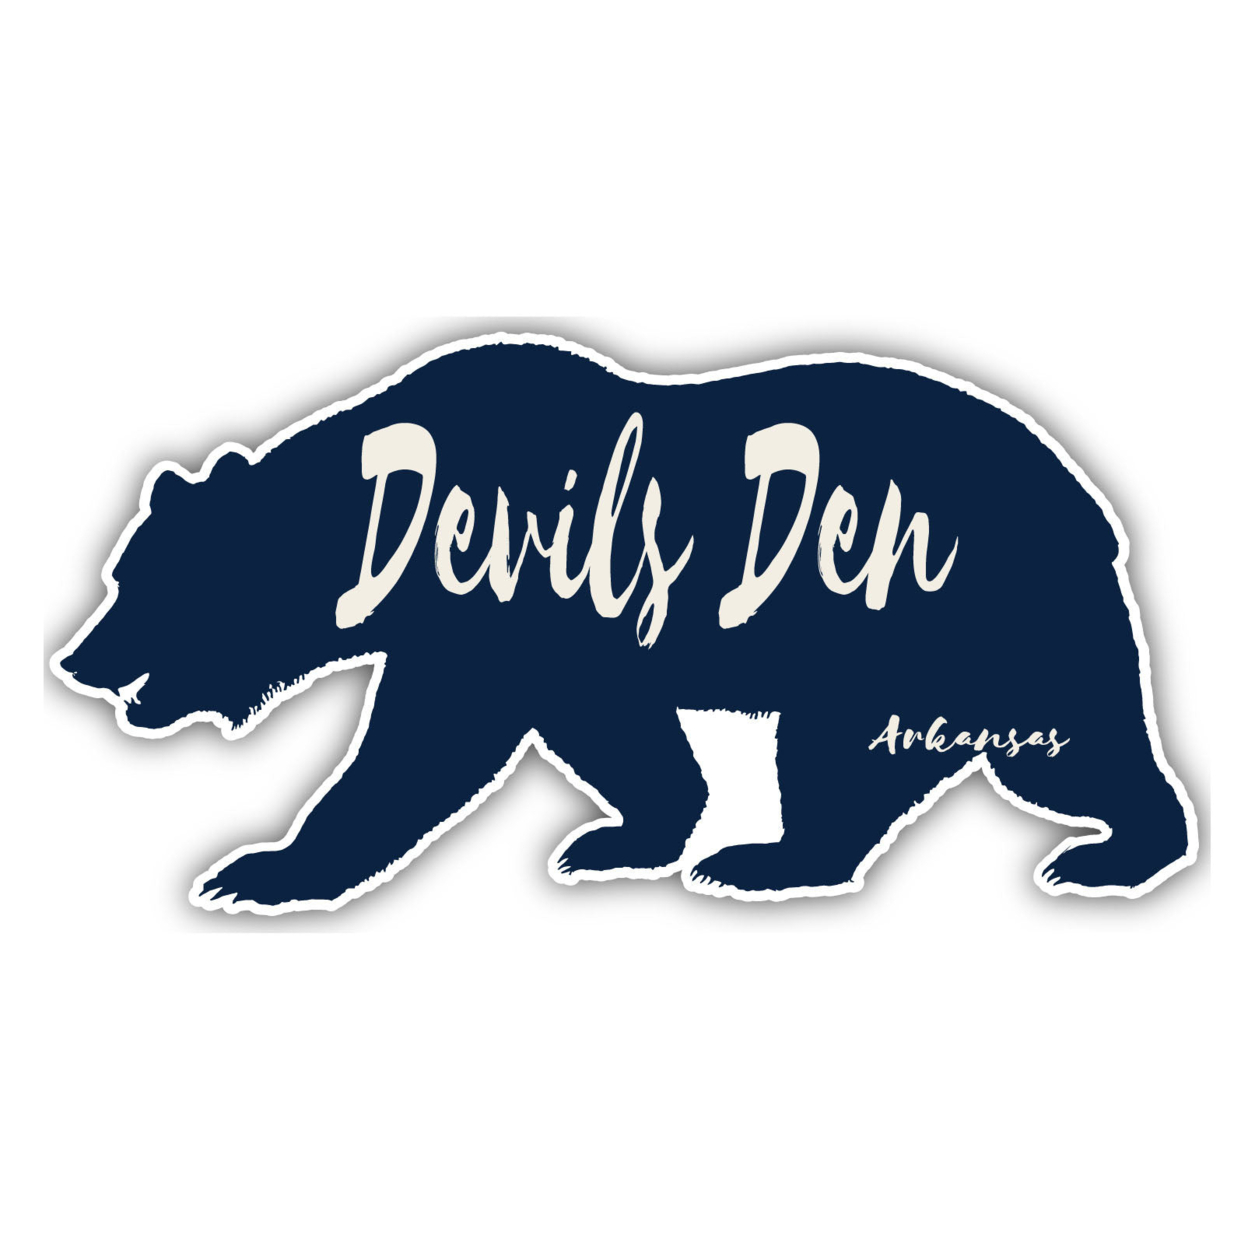 Devils Den Arkansas Souvenir Decorative Stickers (Choose Theme And Size) - 4-Pack, 10-Inch, Great Outdoors